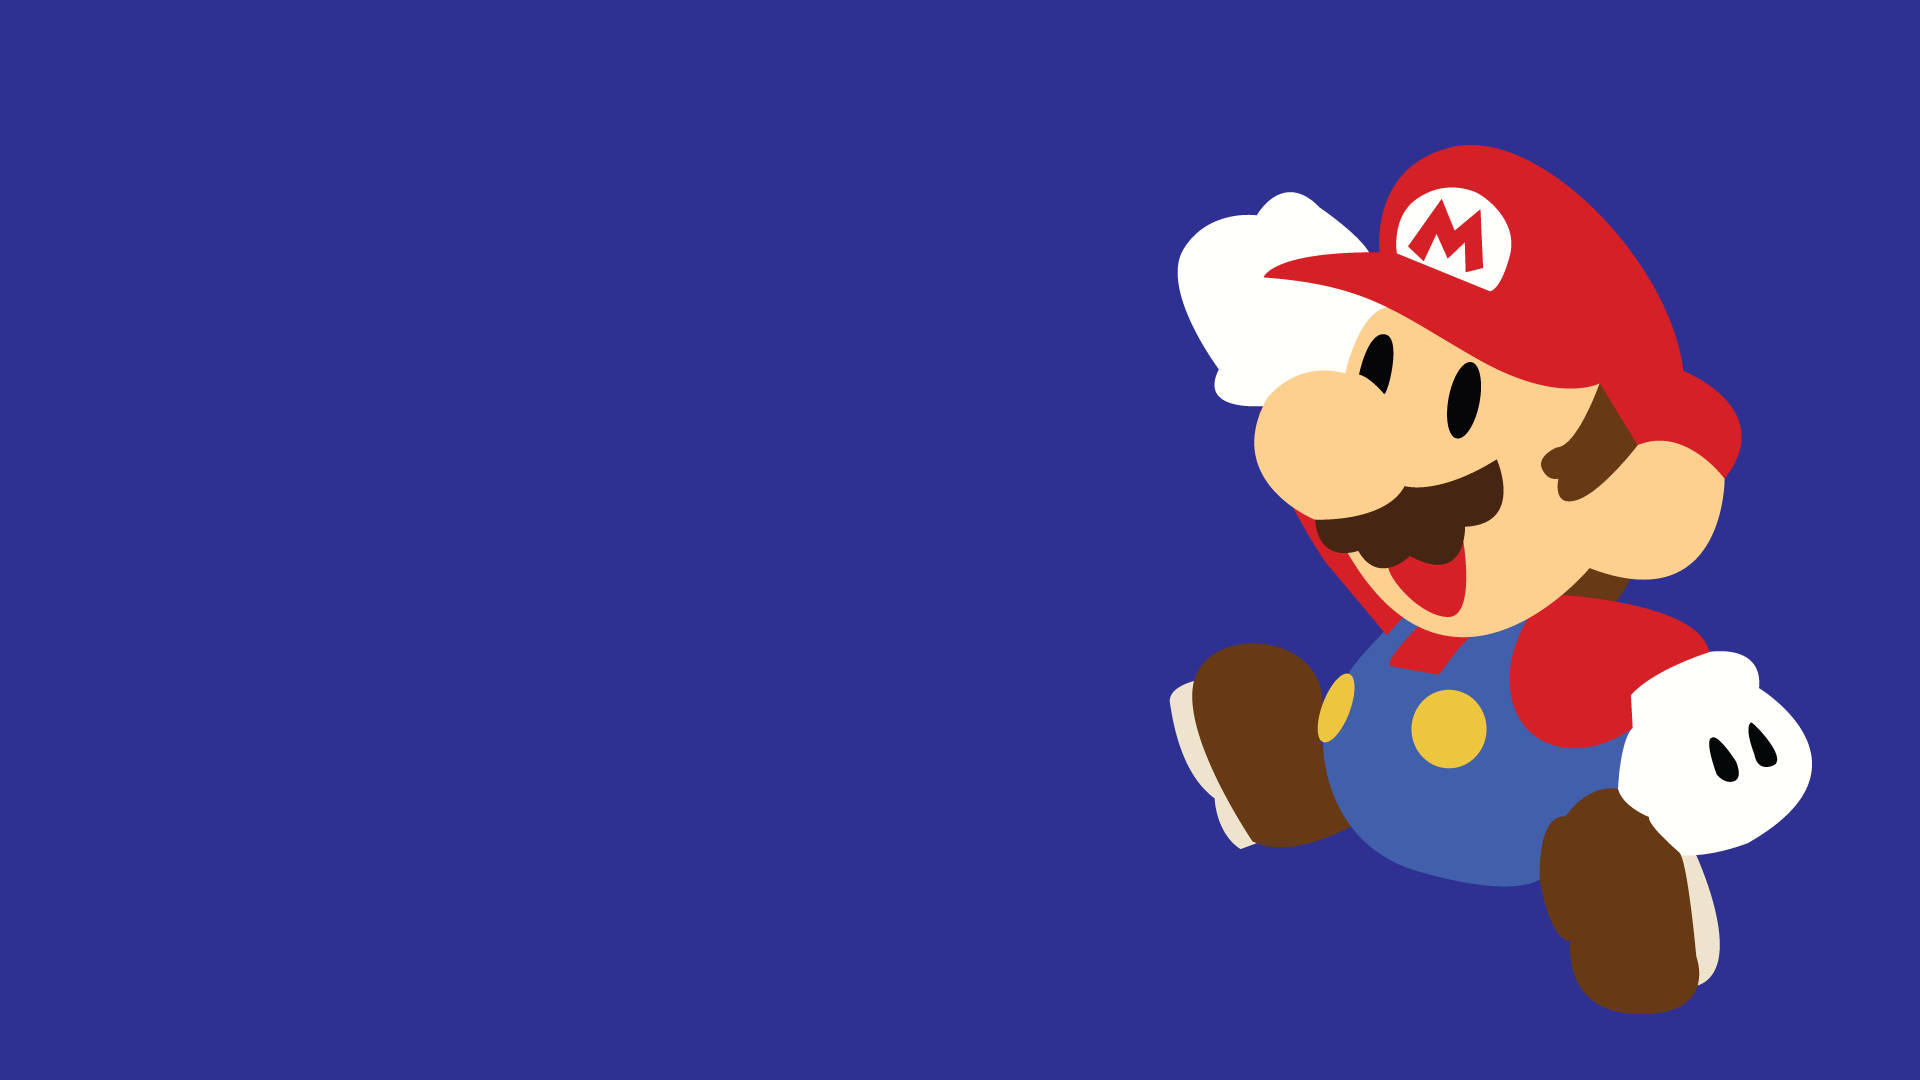 Take one last jump, Mario! Wallpaper